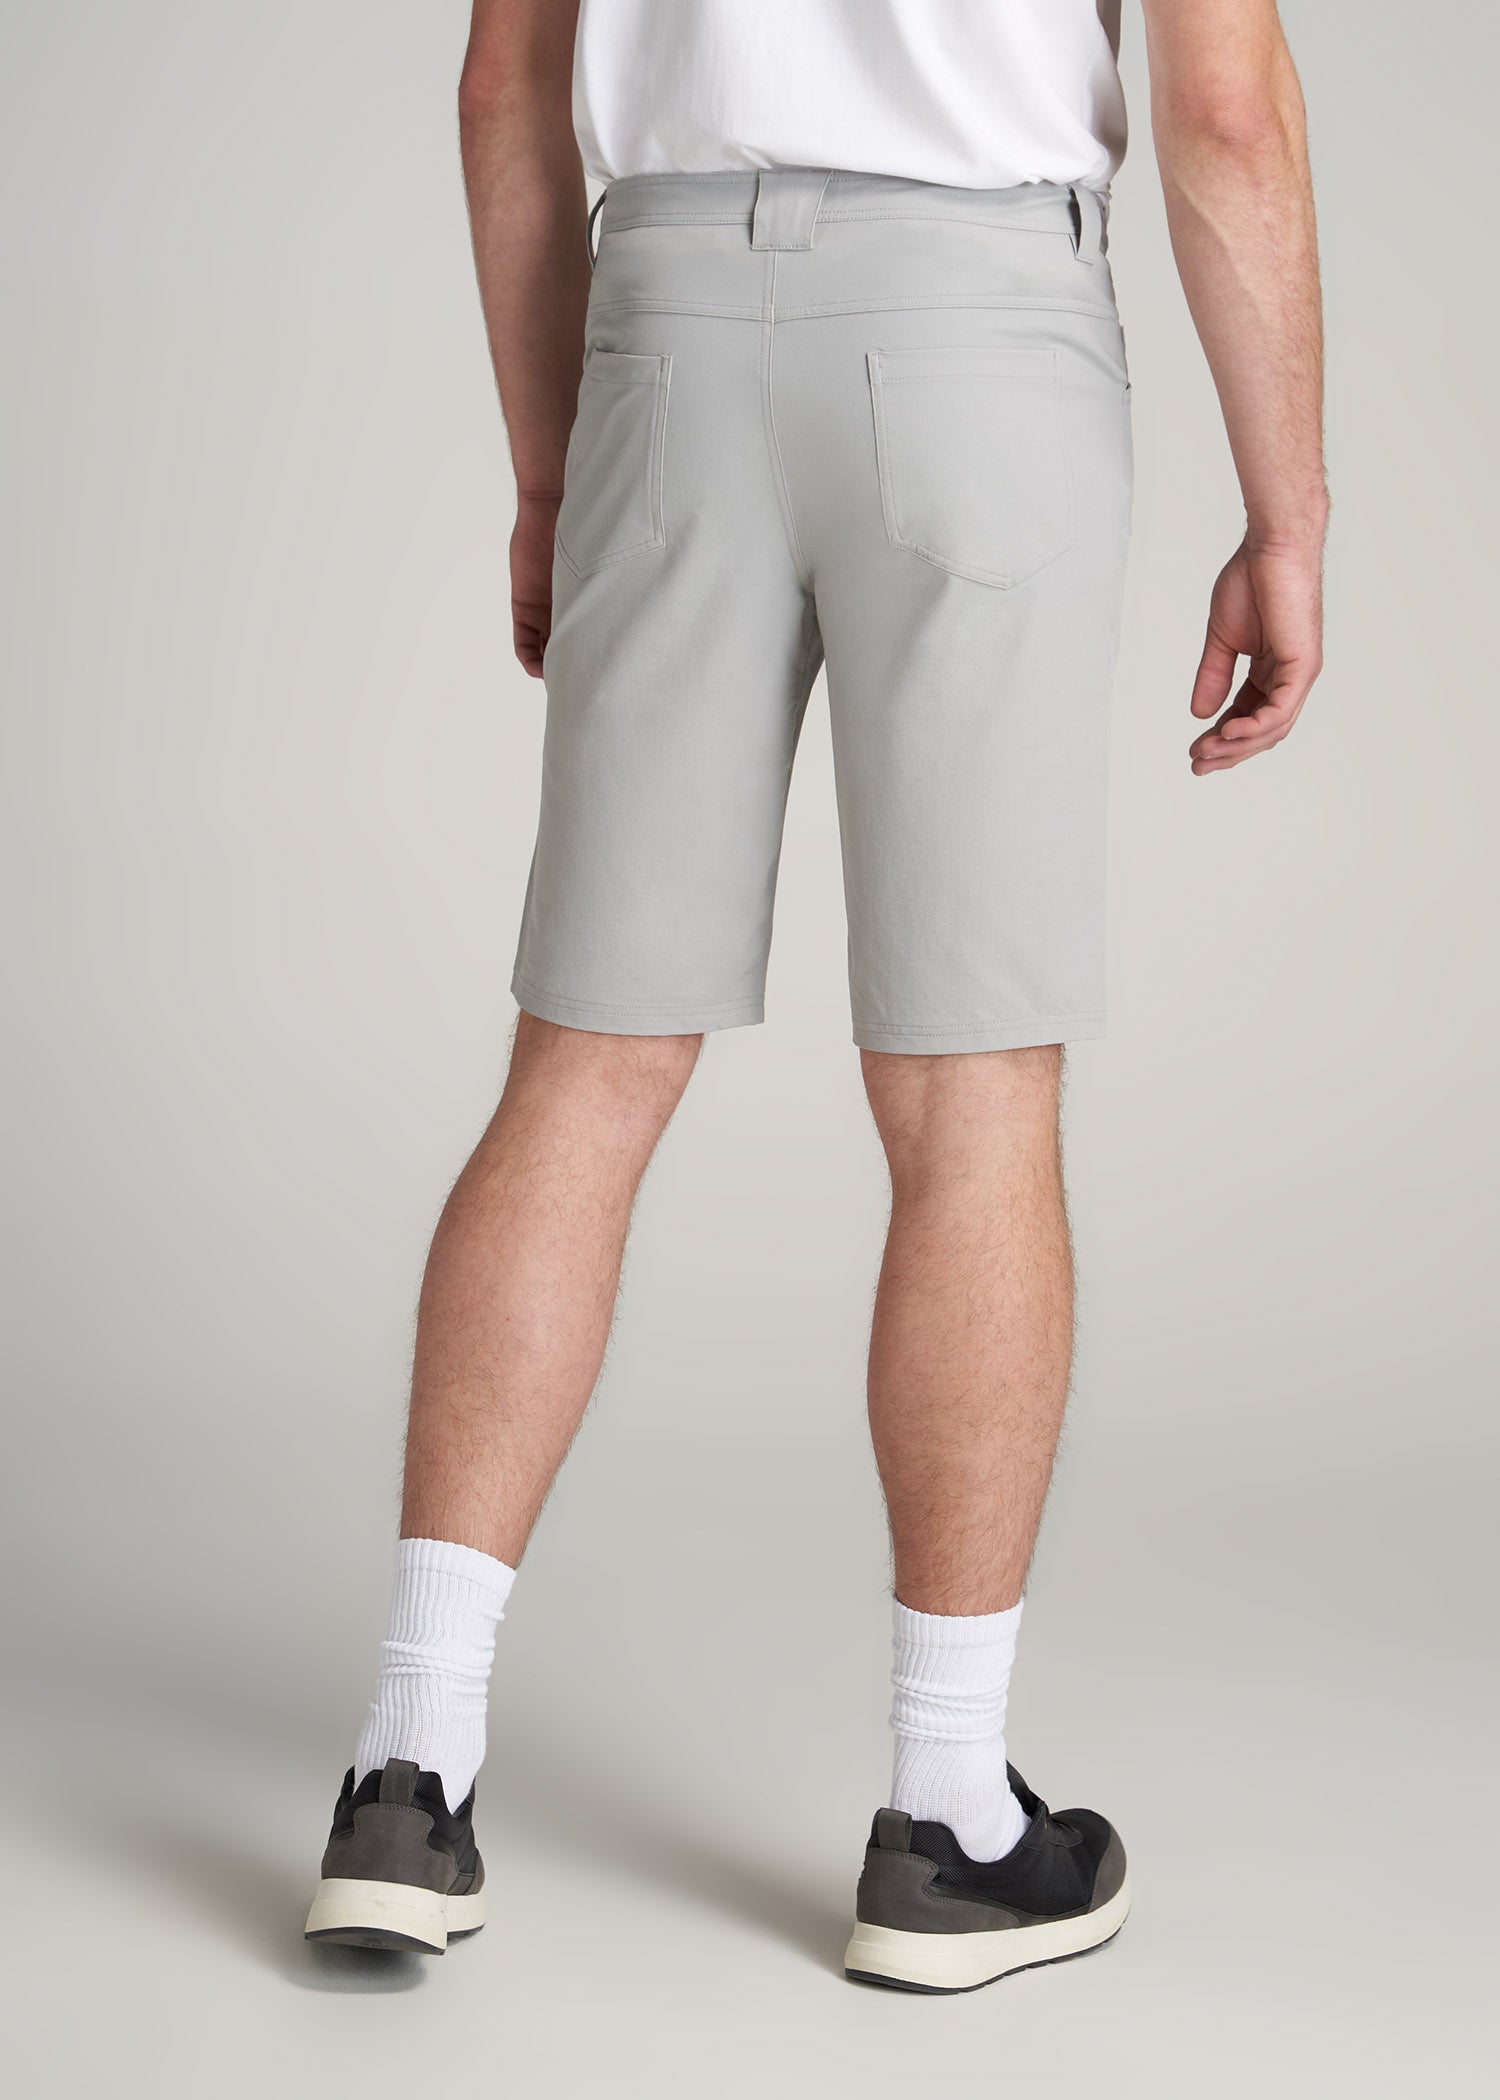 Hiking Shorts for Tall Men in Light Grey 30 / Tall / Light Grey